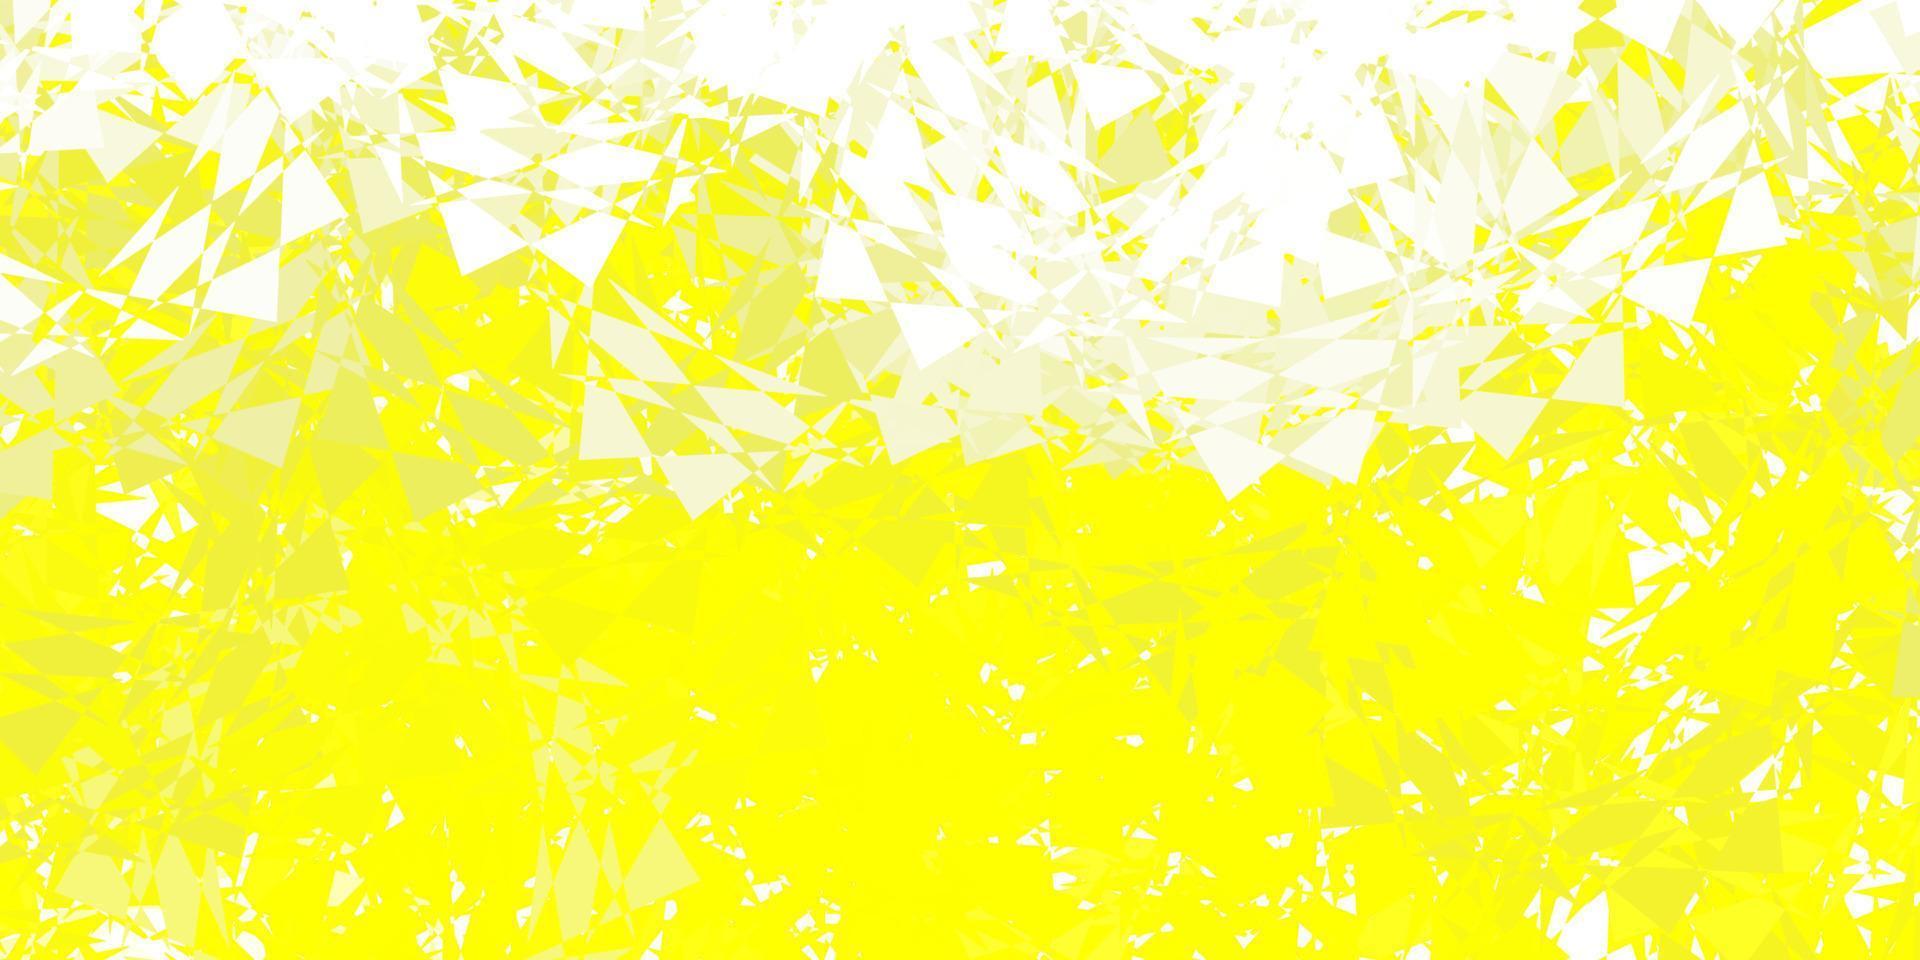 fundo vector amarelo claro com formas poligonais.